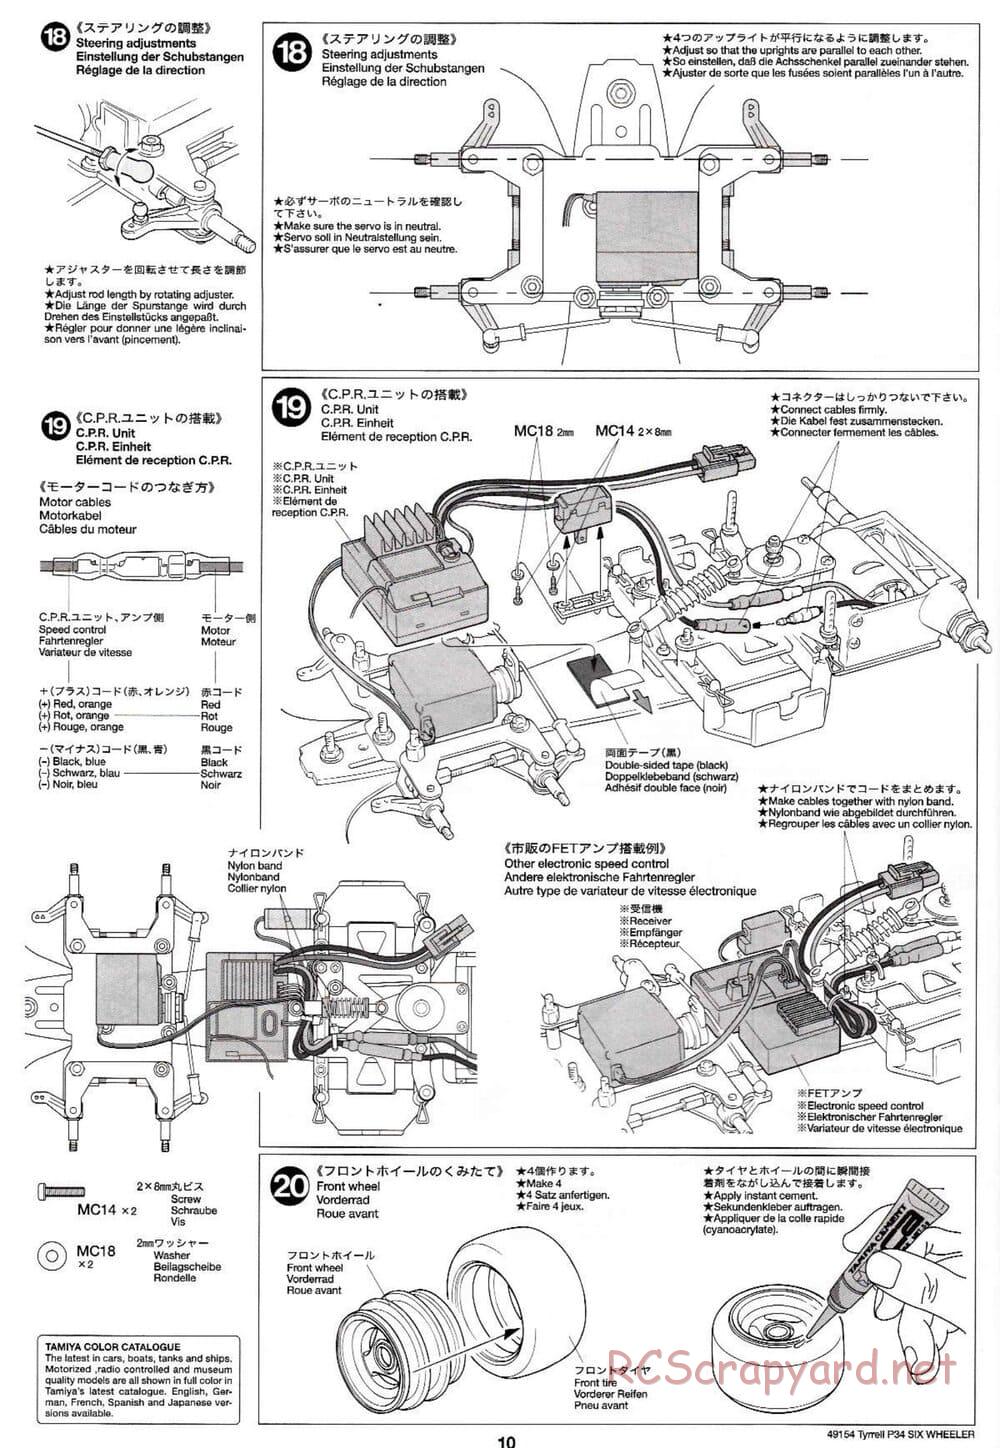 Tamiya - Tyrrell P34 Six Wheeler - F103-6W Chassis - Manual - Page 10